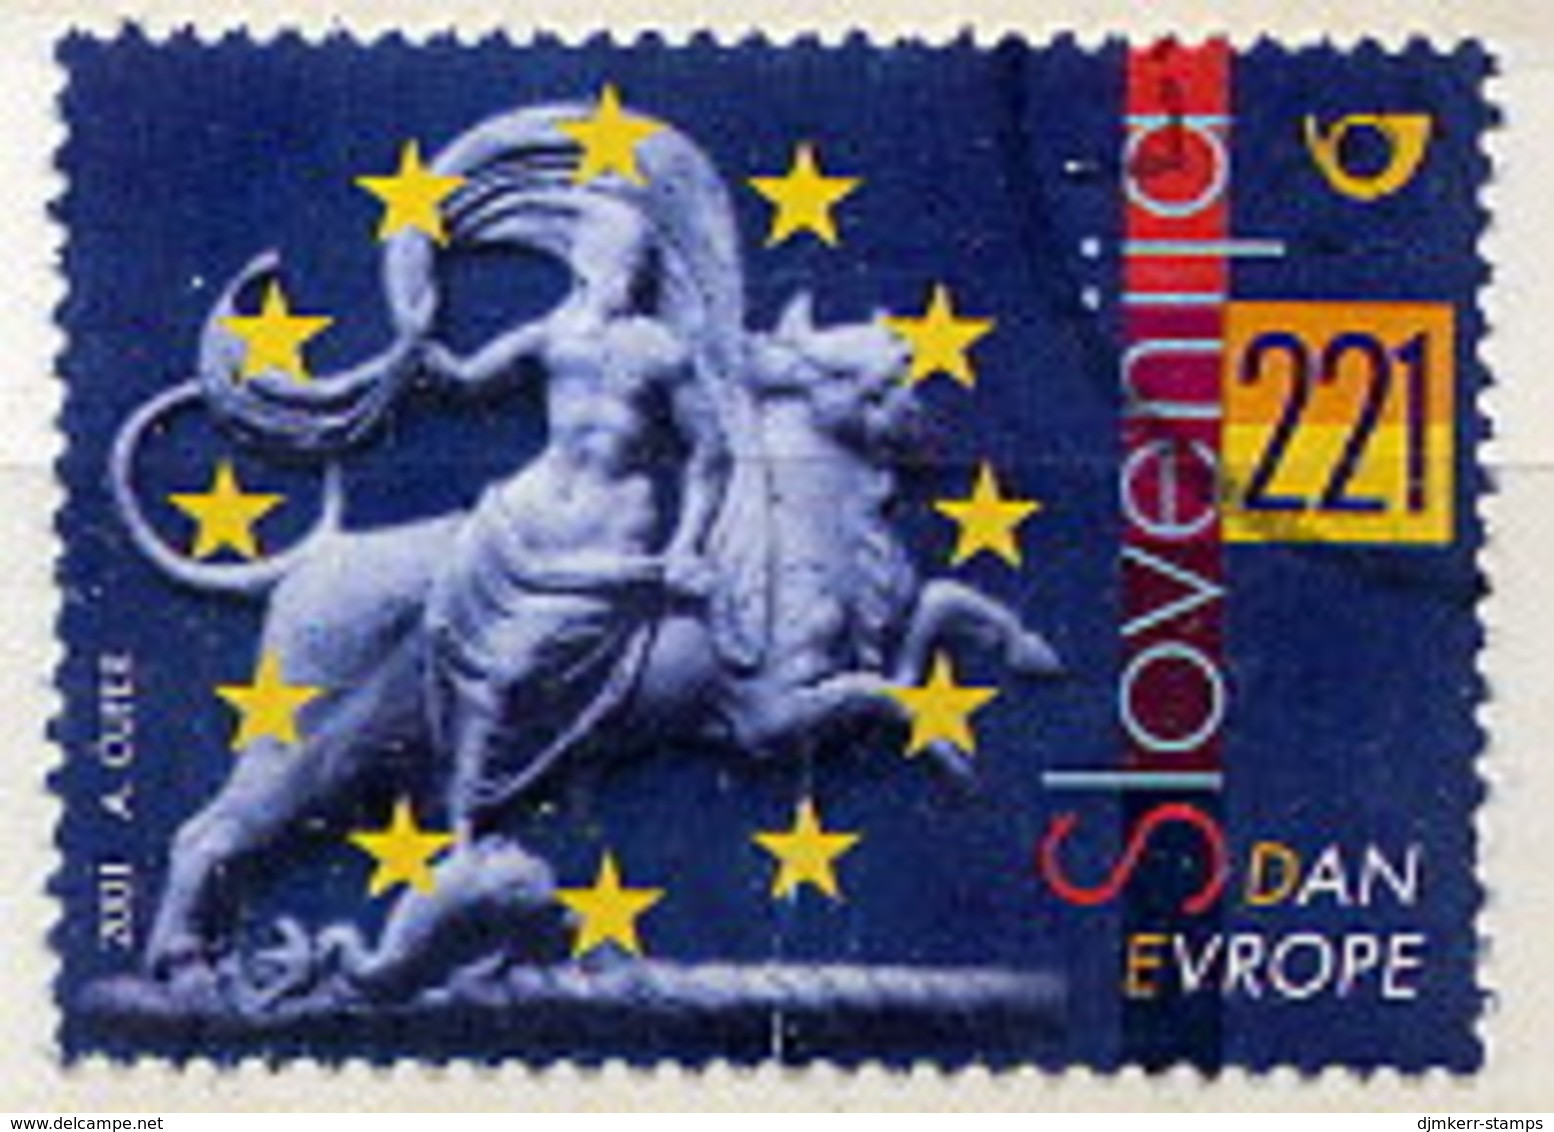 SLOVENIA 2001 Europe Day Used. Michel 348 - Slovenië